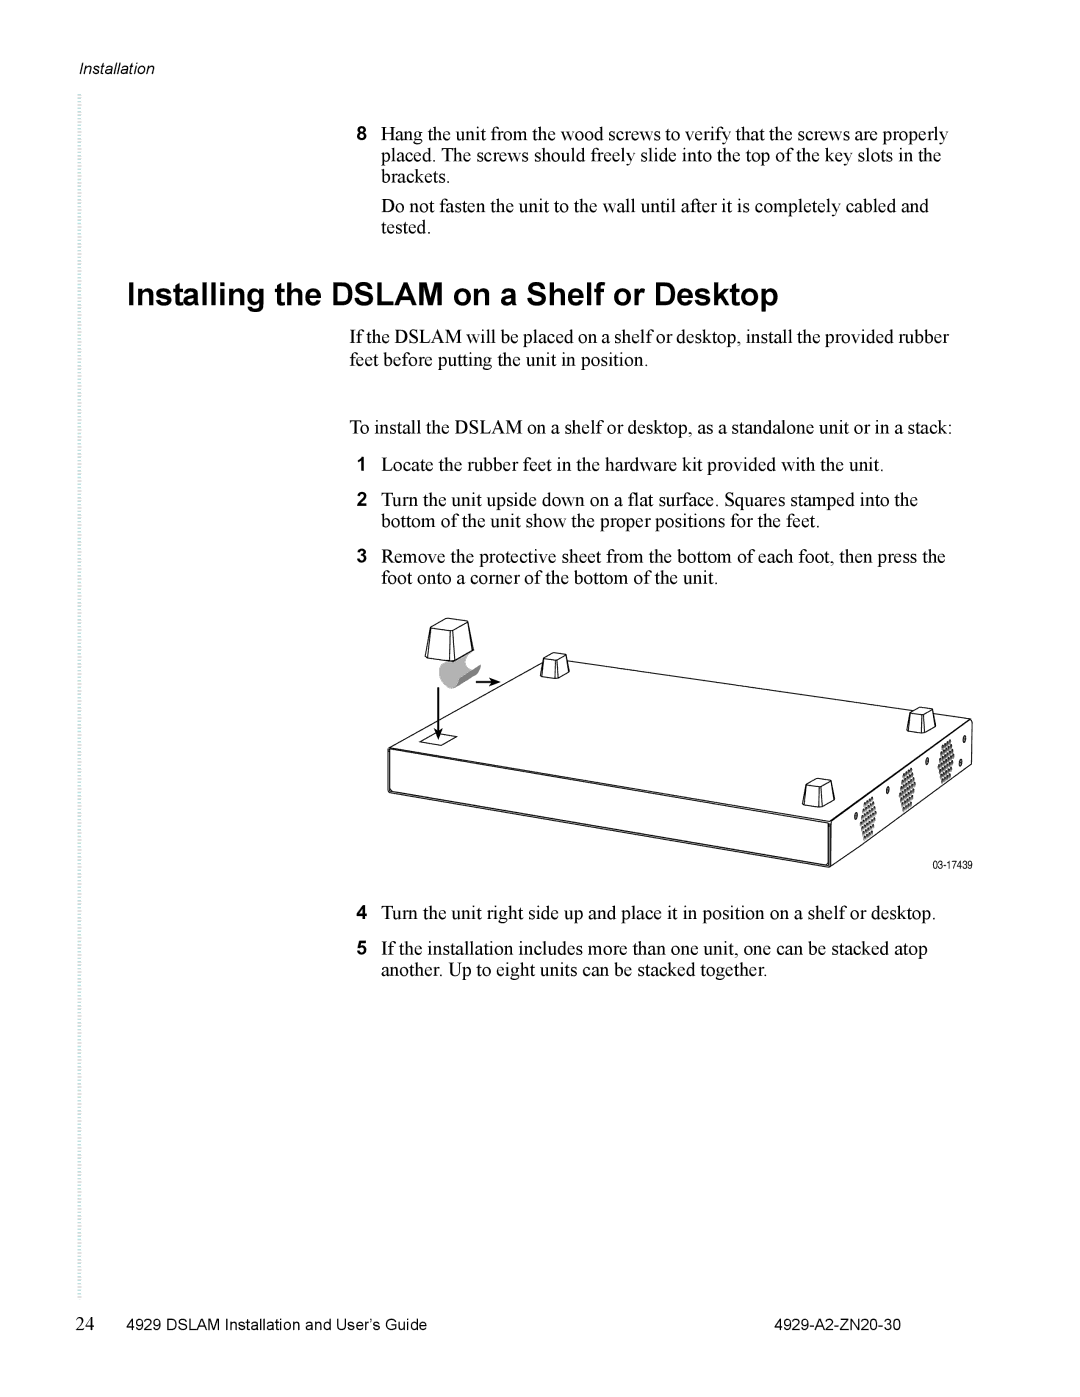 Zhone Technologies 4929 DSLAM manual Installing the Dslam on a Shelf or Desktop 